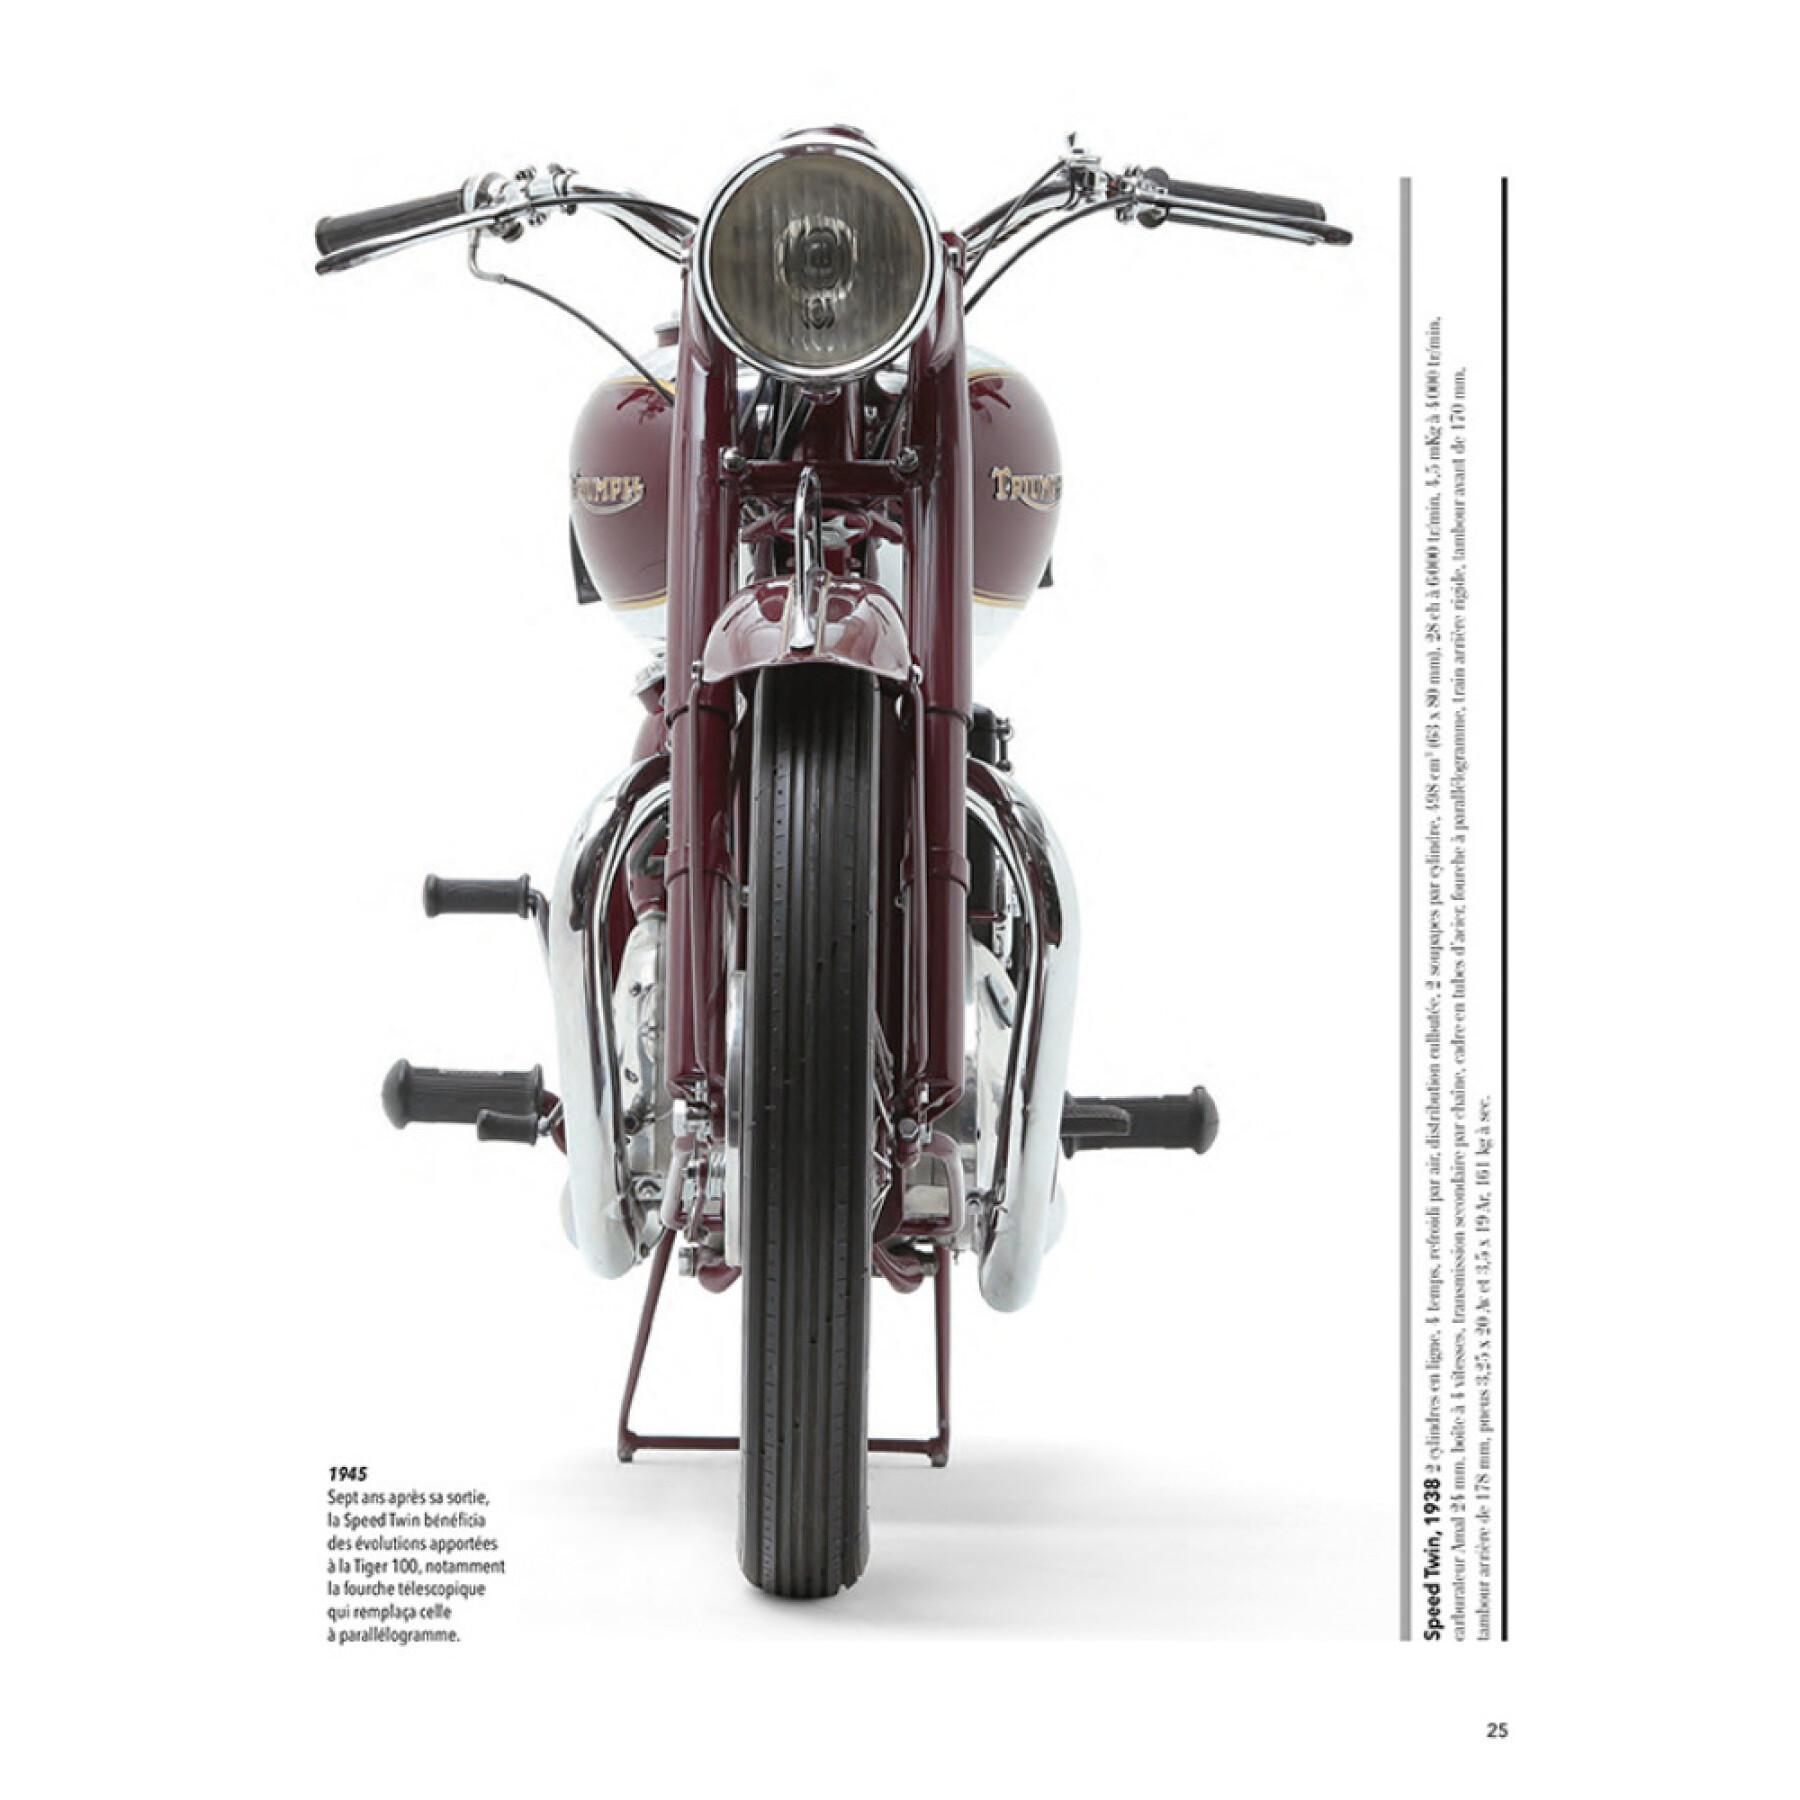 Libro inglés motorbike art ned Kubbick Triumph